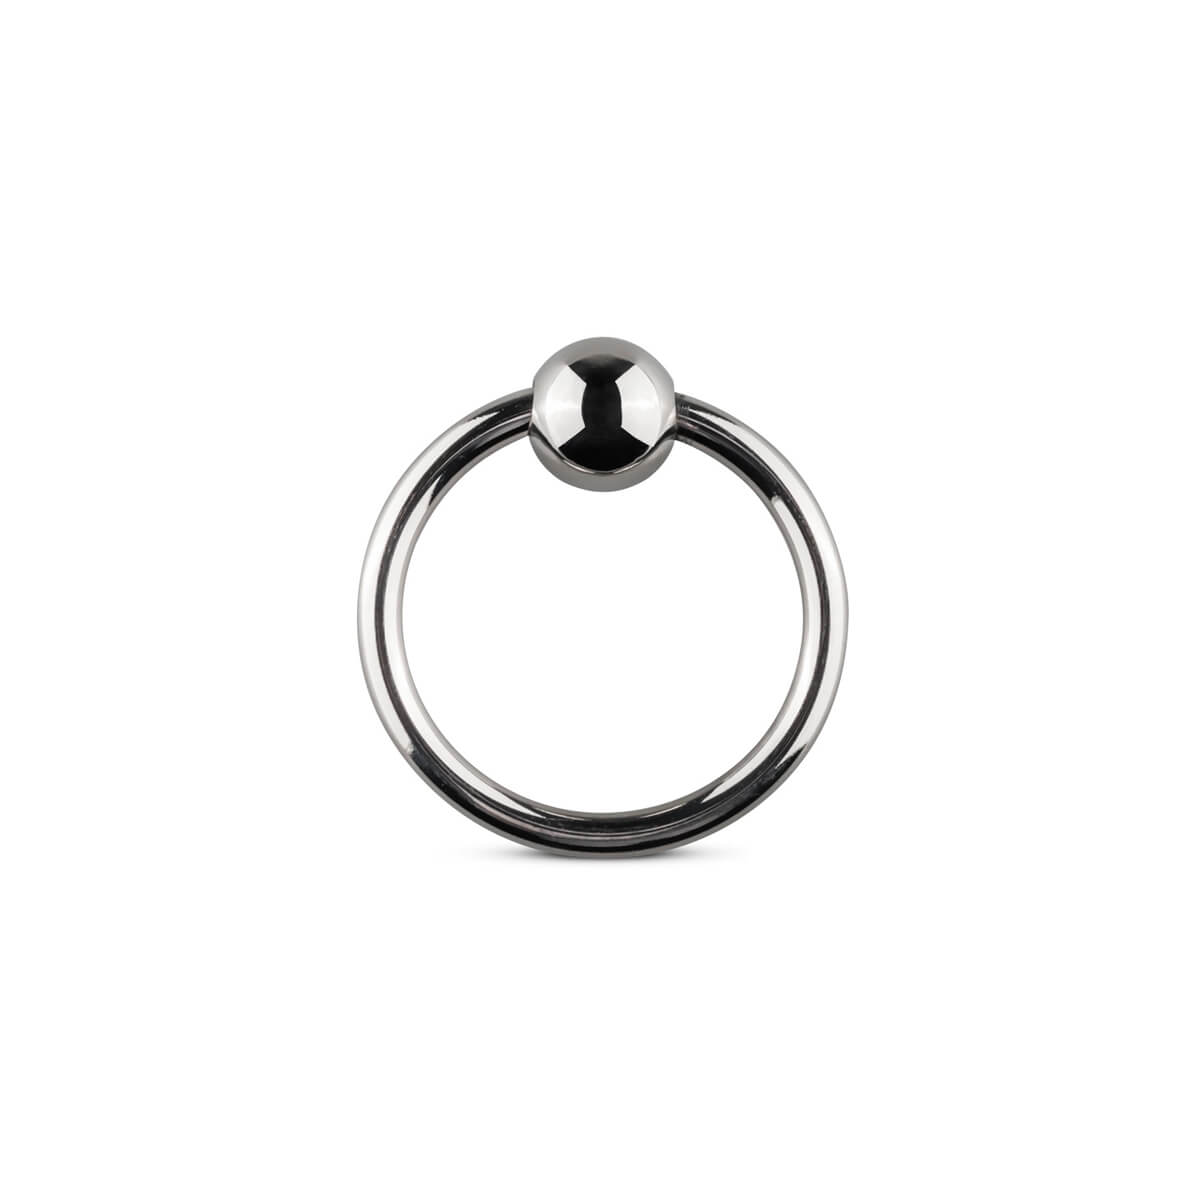 Sinner Gear Metal glans-ring - kovový kroužek s kuličkou